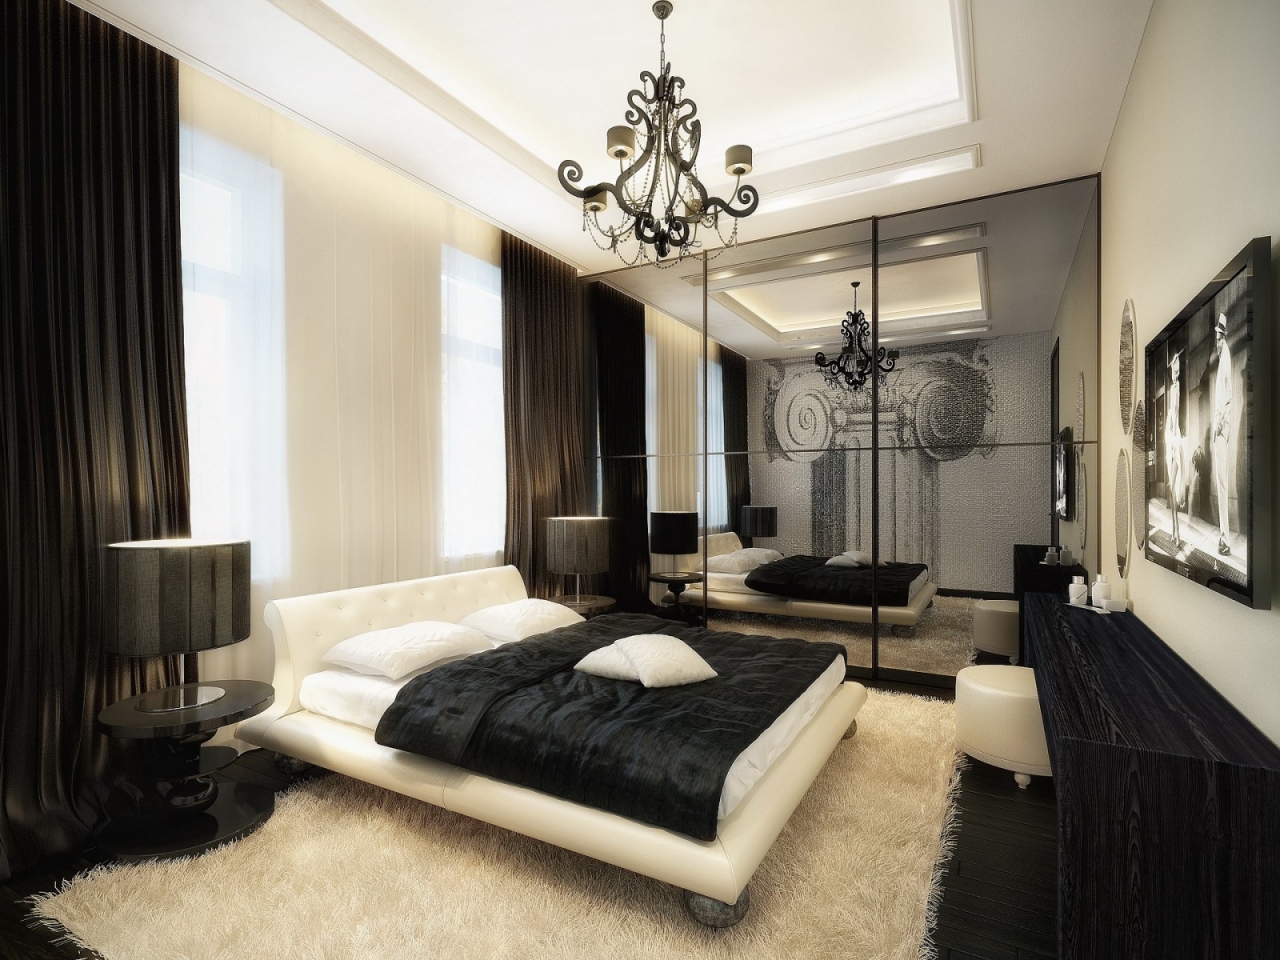 Splendid Bedroom Design for 1280 x 960 resolution